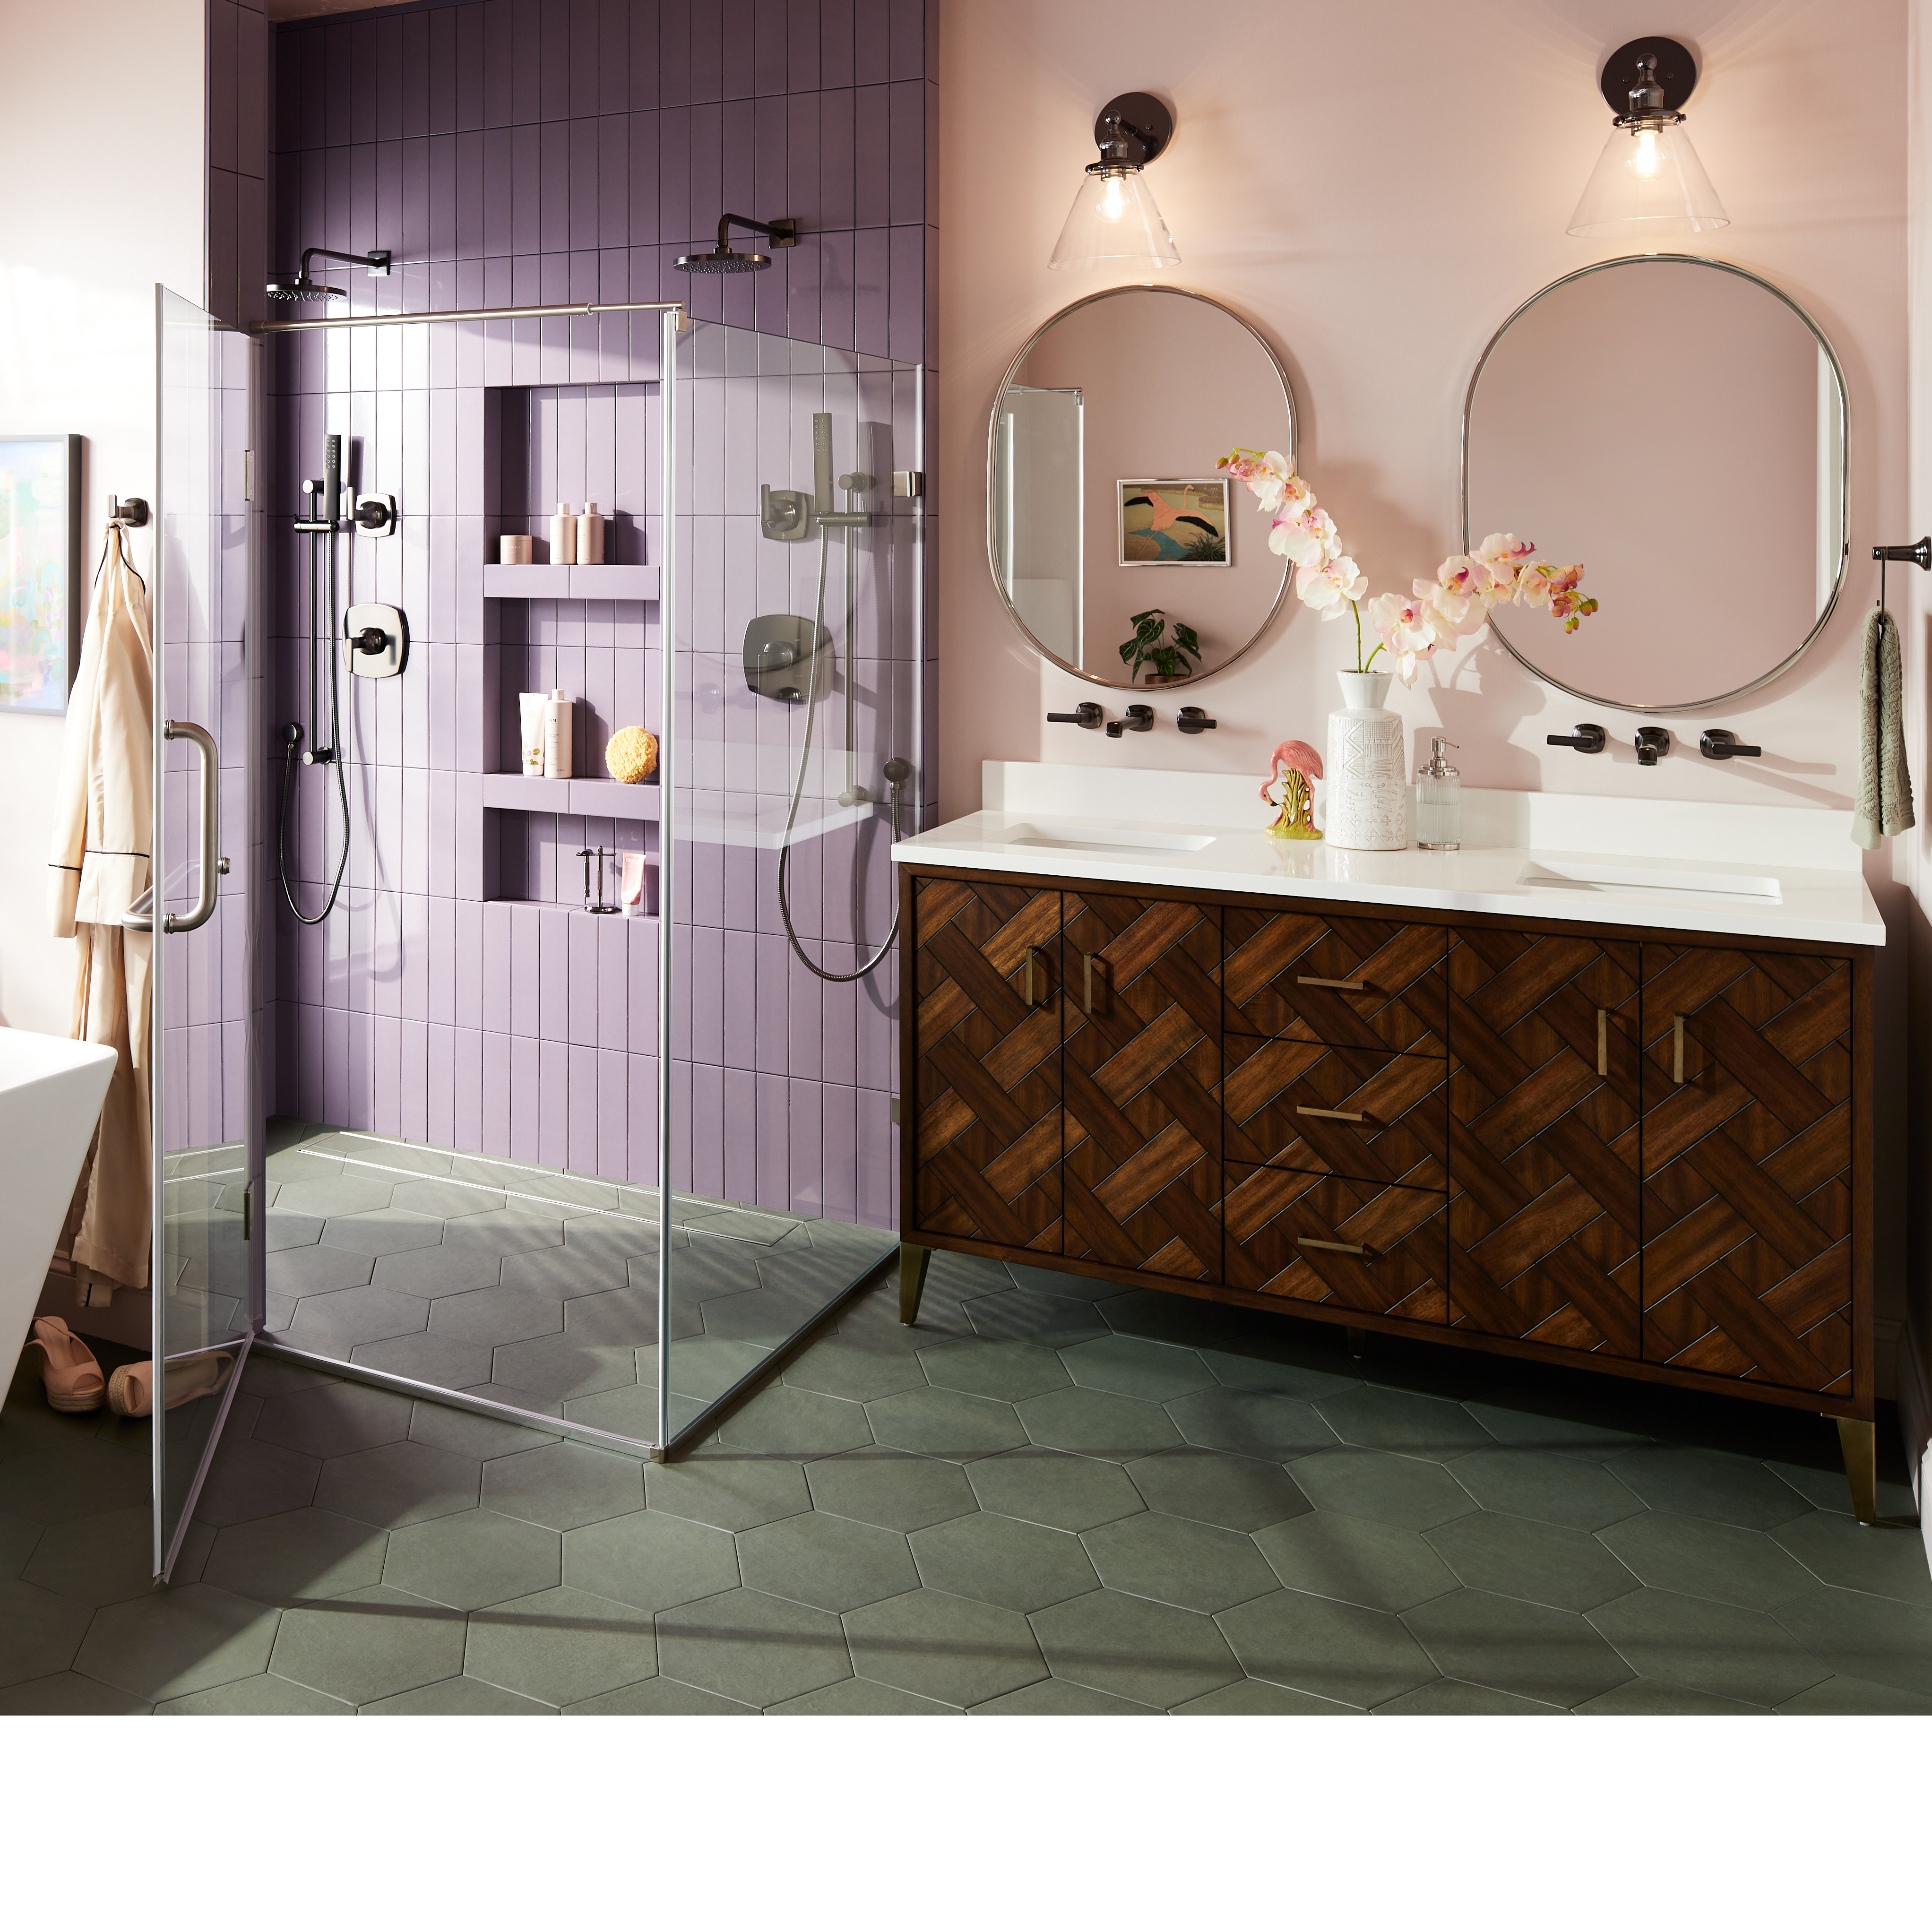 60" Patzi Vanity, Sefina Wall-Mount Bathroom Faucet & Tub Faucet in Gunmetal, Colborne Oval Mirror, Hibiscus Freestanding Tub